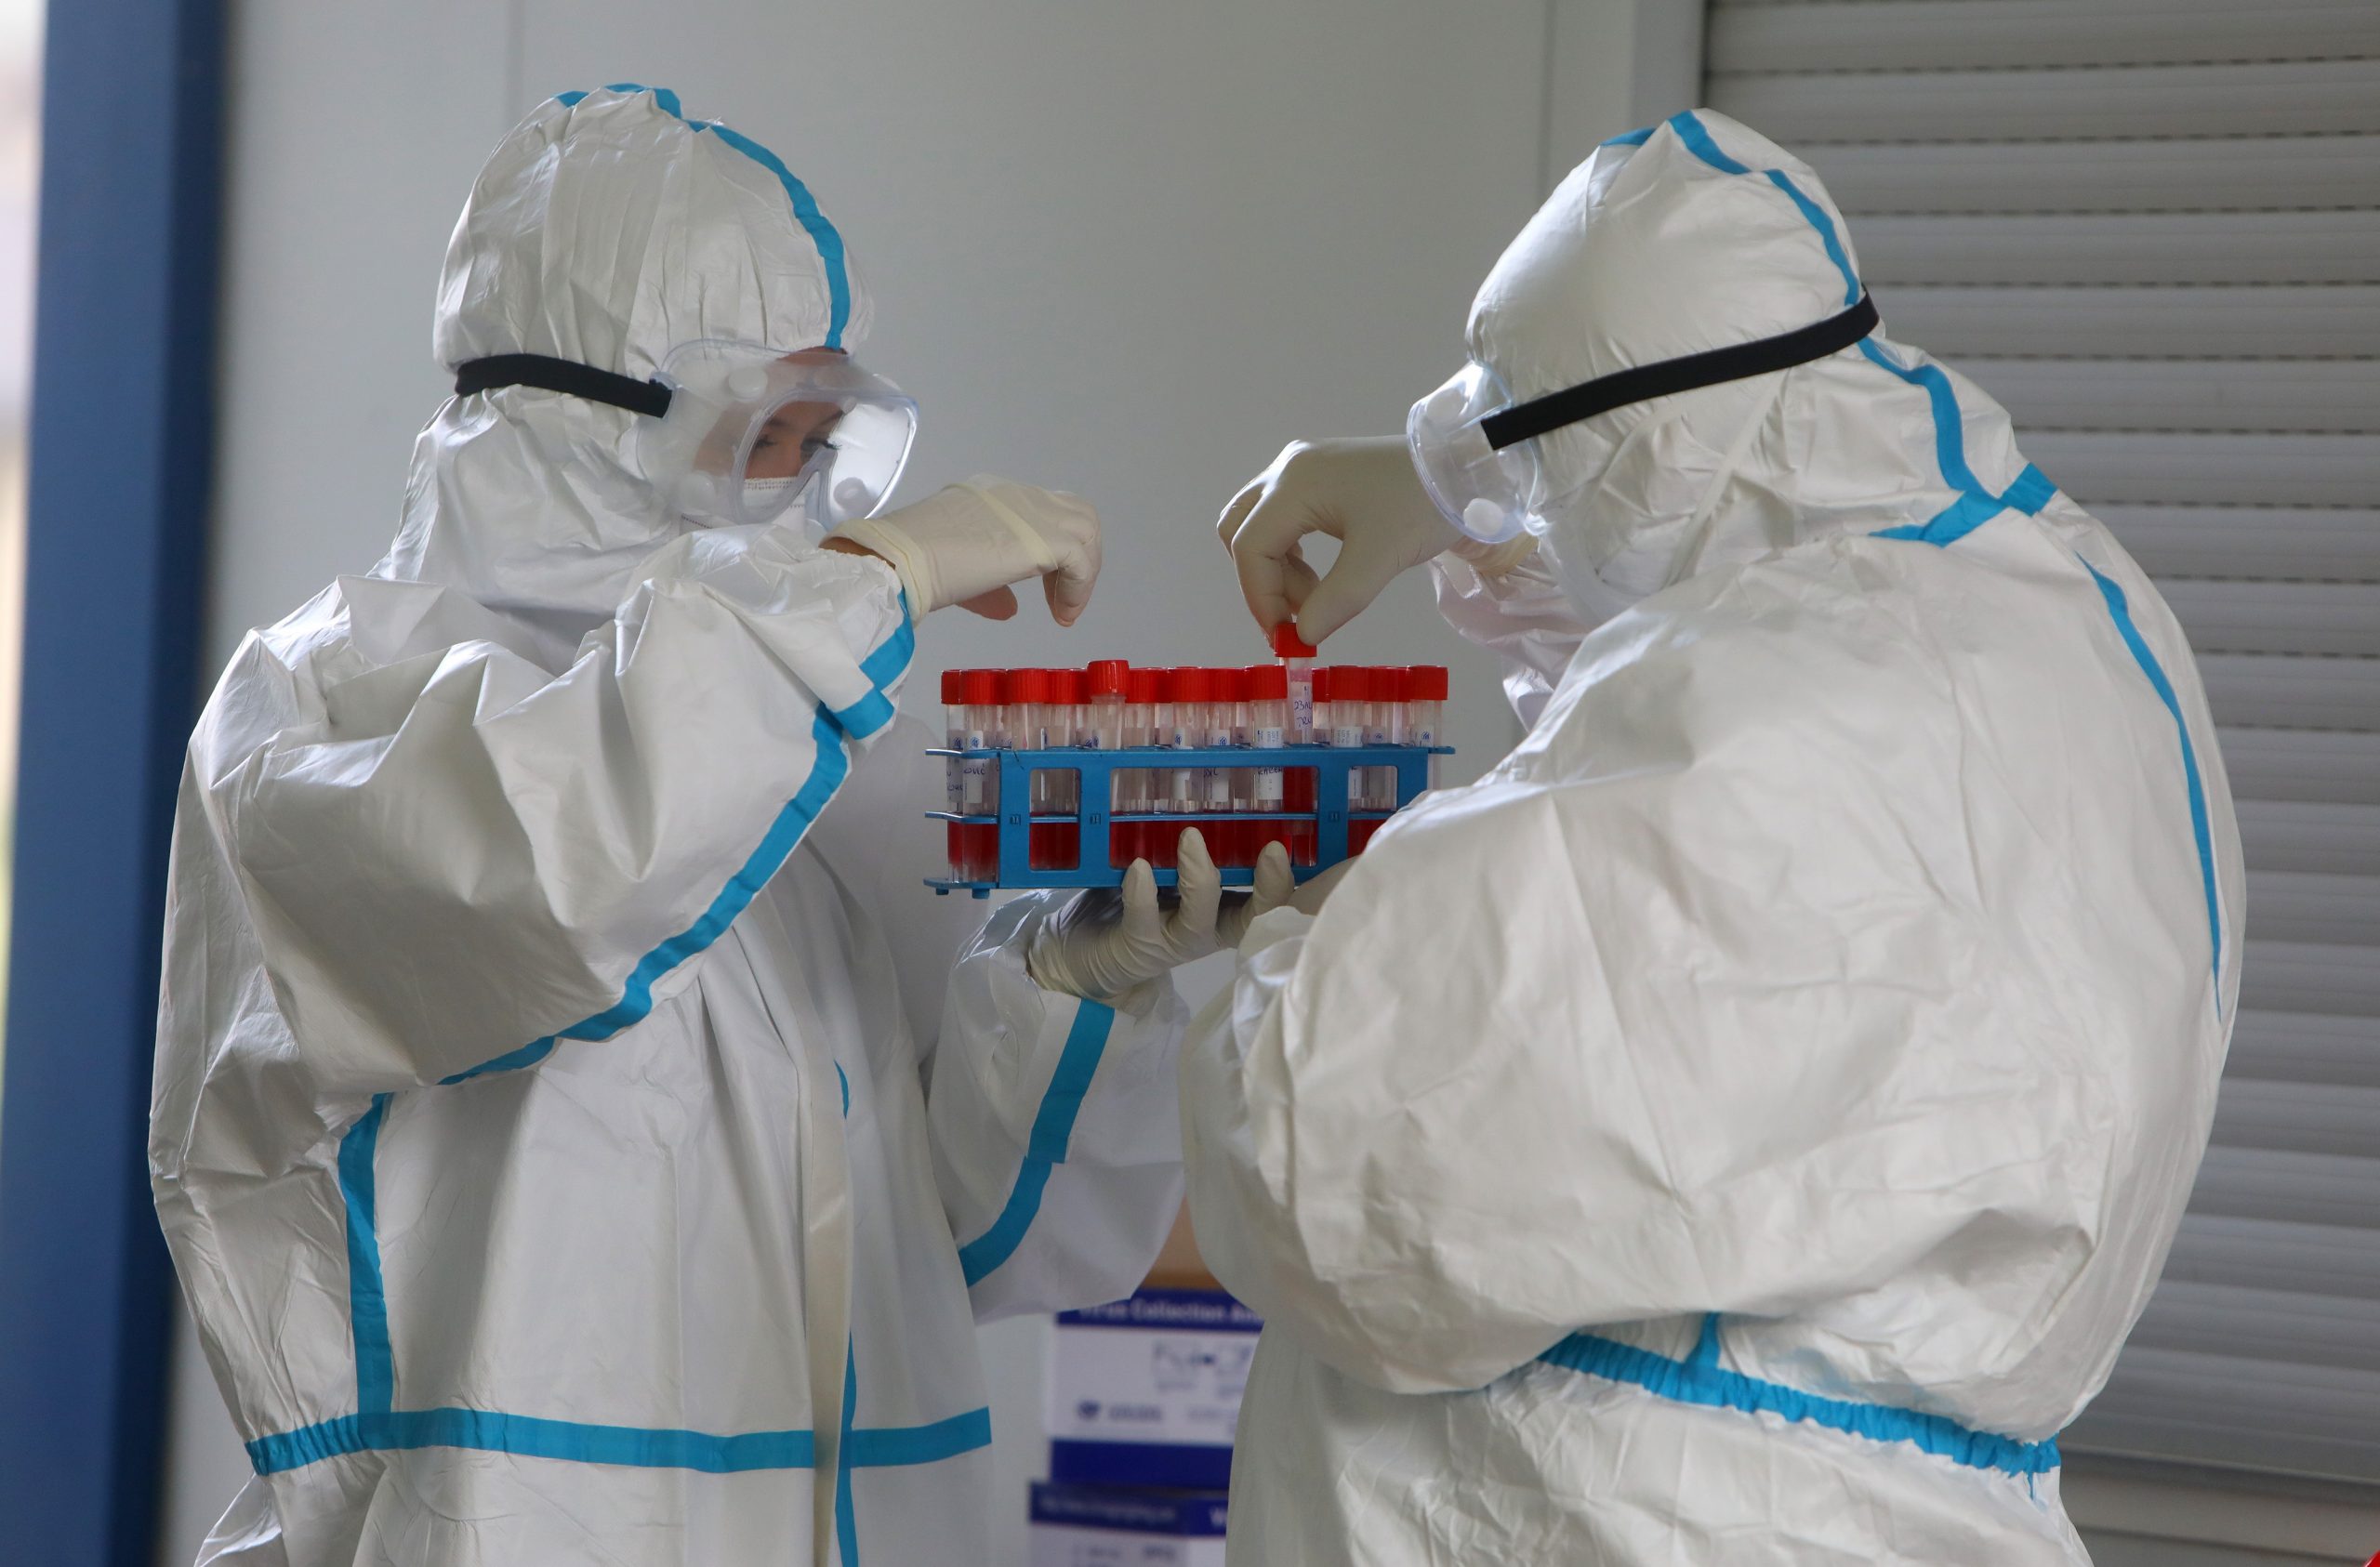 24.08.2021., Karlovac - Guzva na testiranju za koronavirus na drive-in lokaciji u Luscicu.
Photo: Kristina Stedul Fabac/PIXSELL